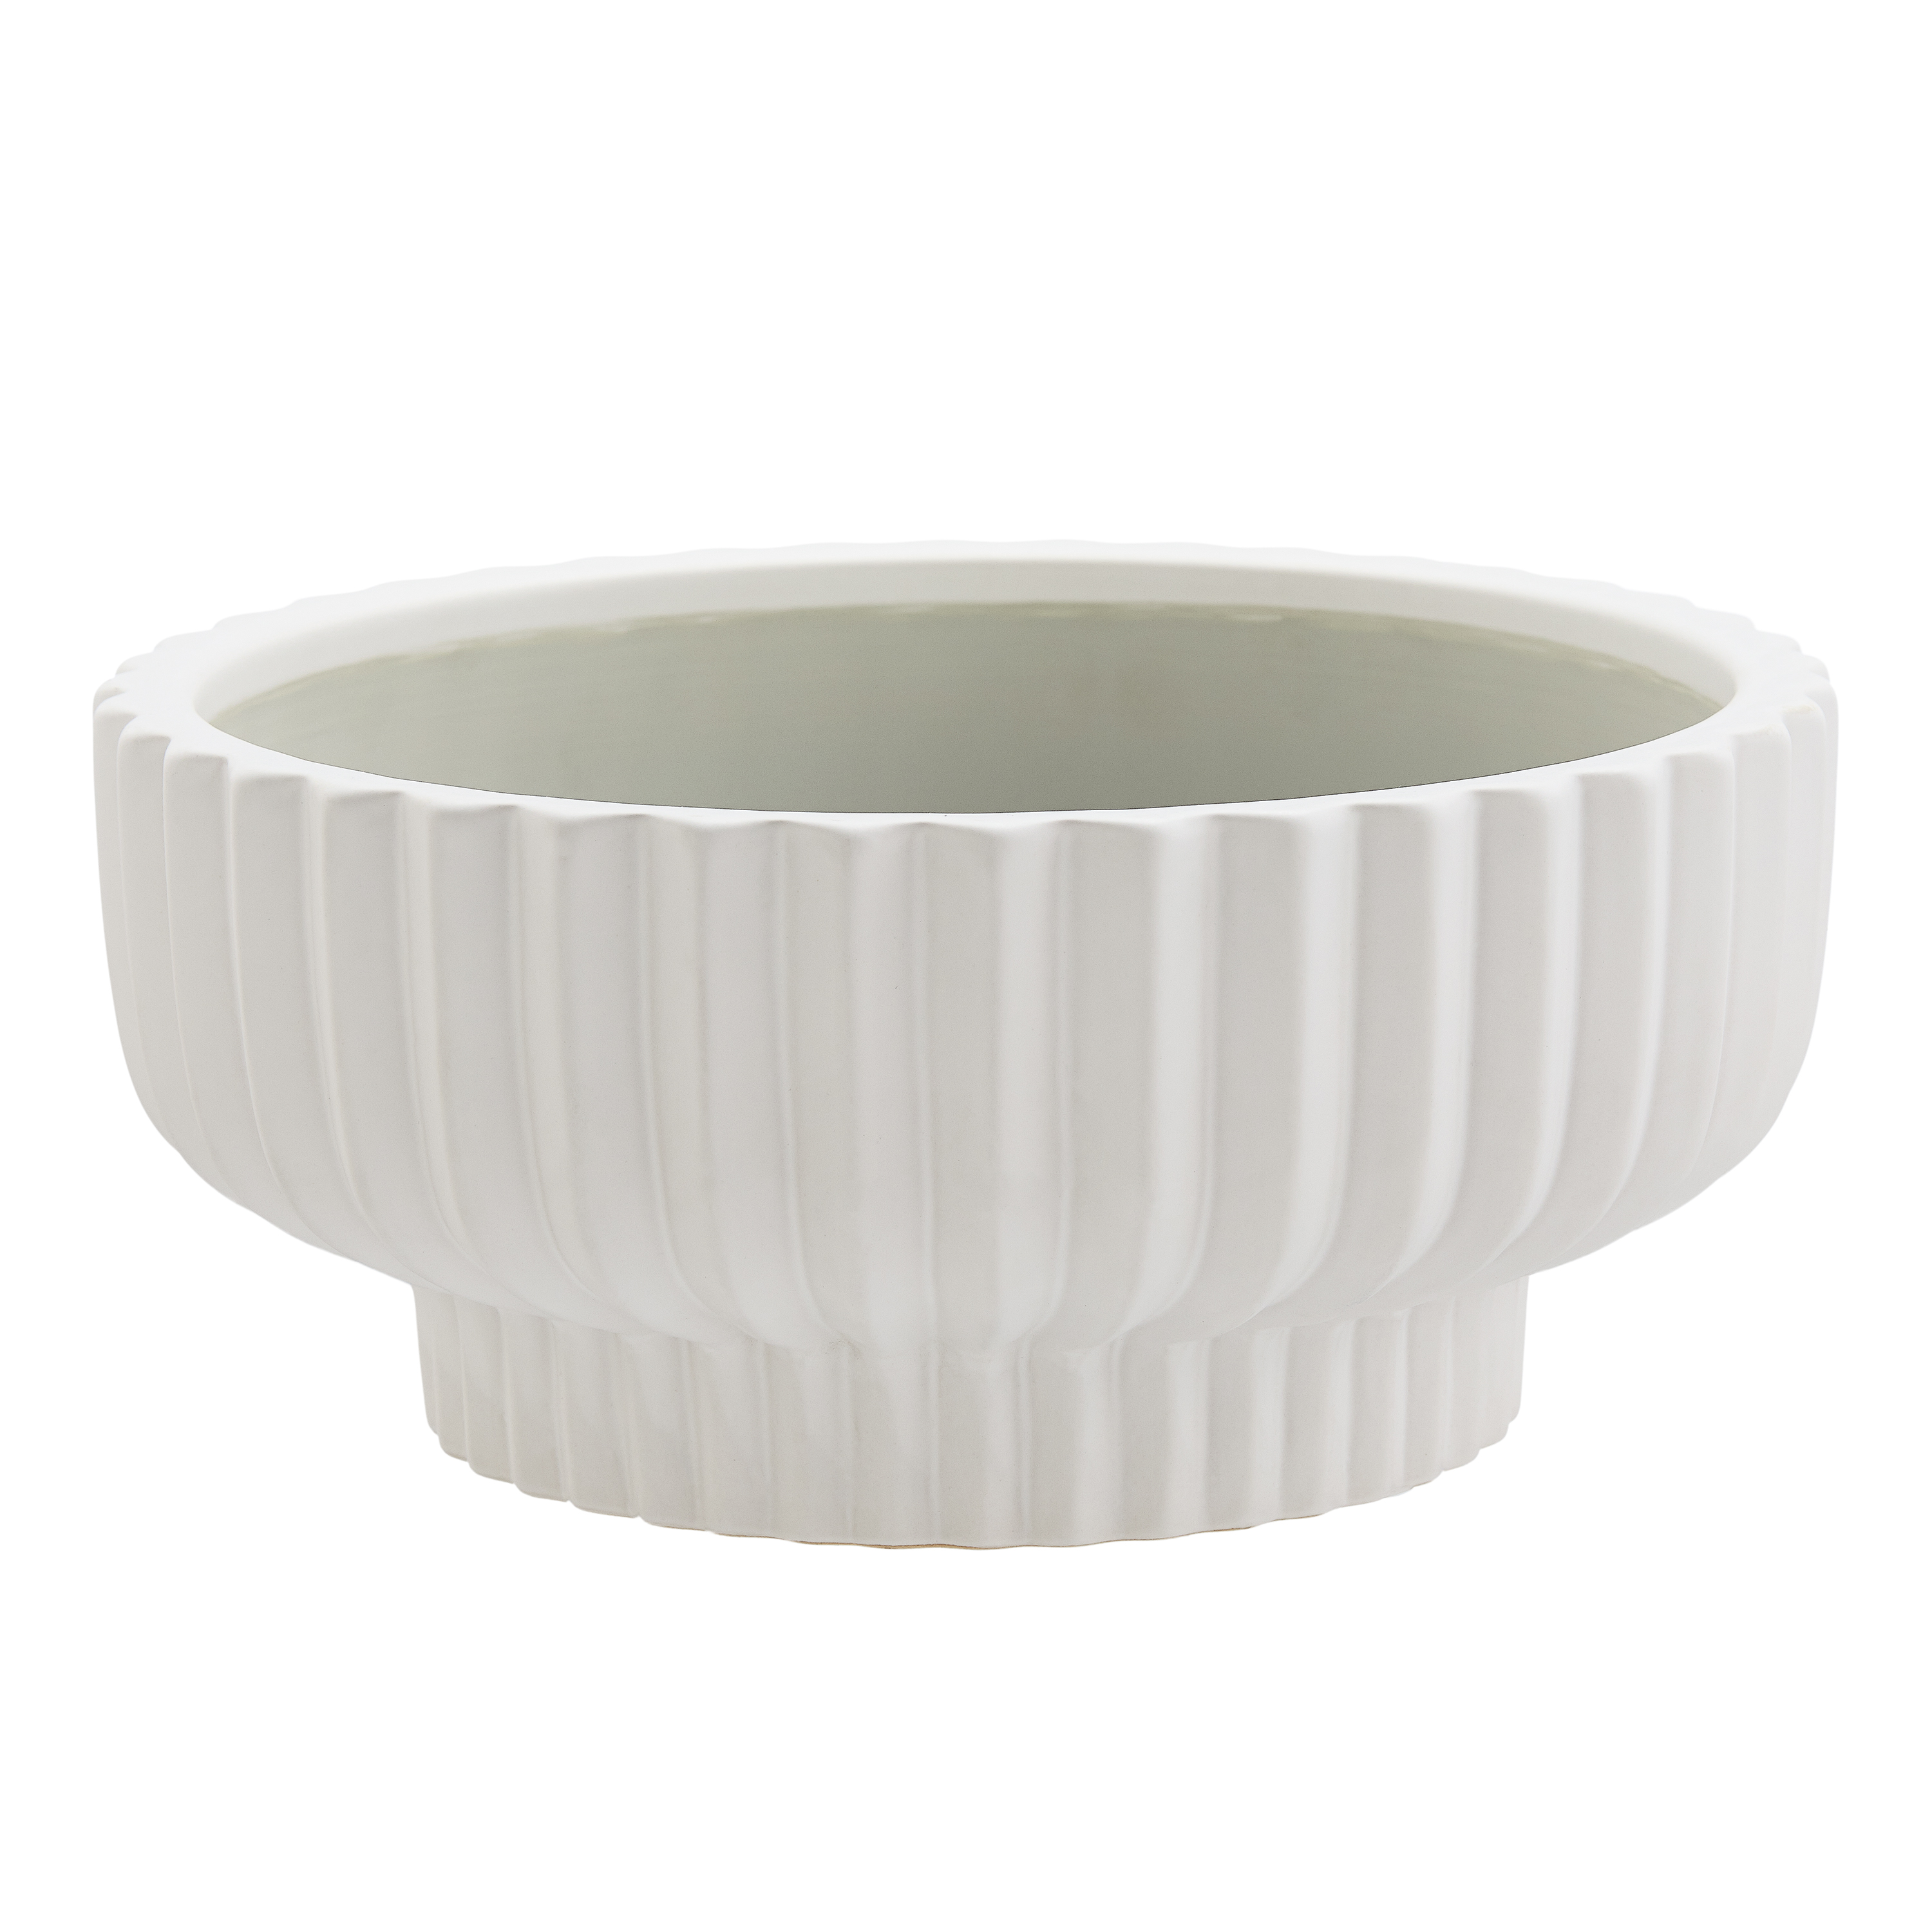 Better Homes & Gardens Pottery 12" Fischer Round Ceramic Planter, White - image 1 of 8